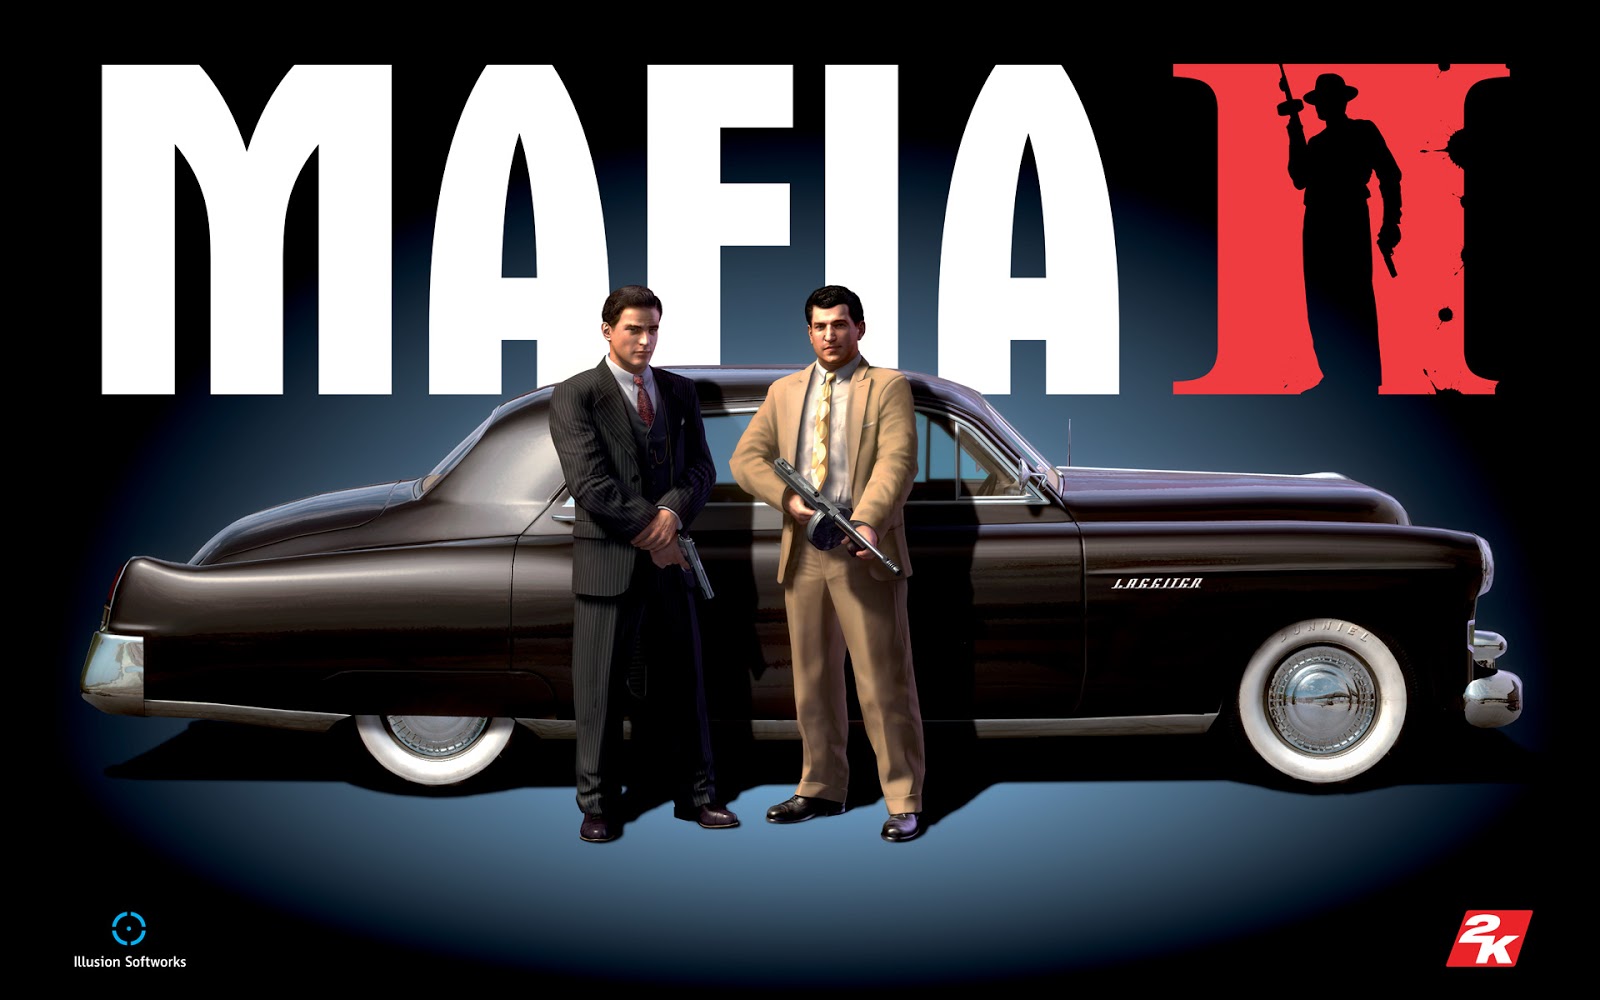 Mafia 2 Full Game Free Download Download PC Games PC